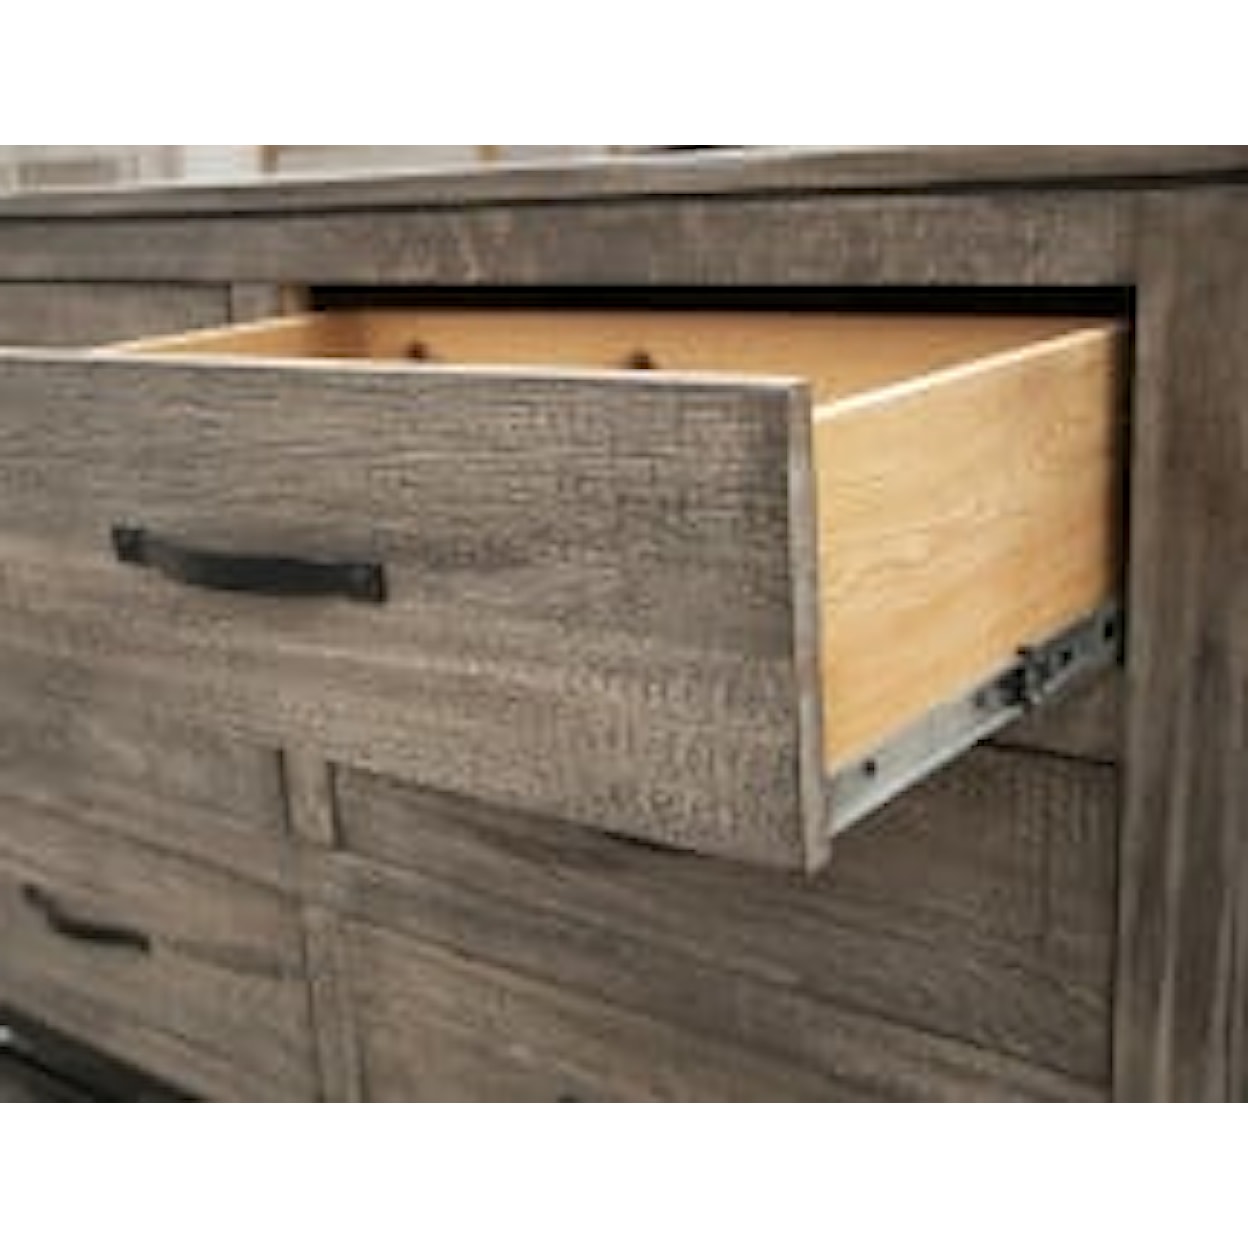 International Furniture Direct Blacksmith 6-Drawer Dresser